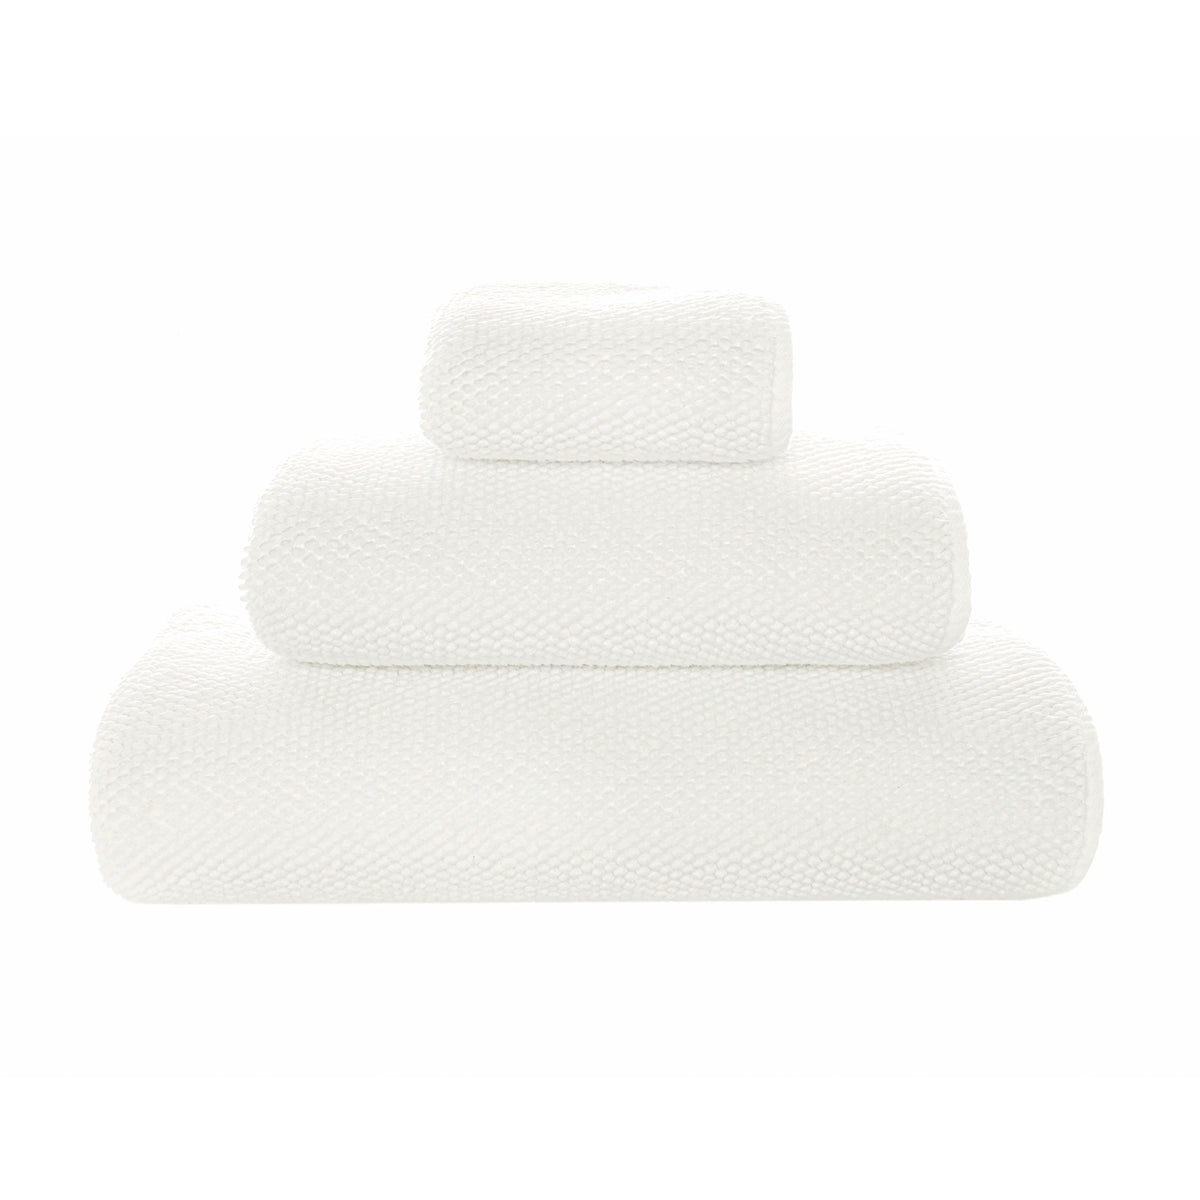 Silo Image of Graccioza Pearls Bath Towels in Color Snow